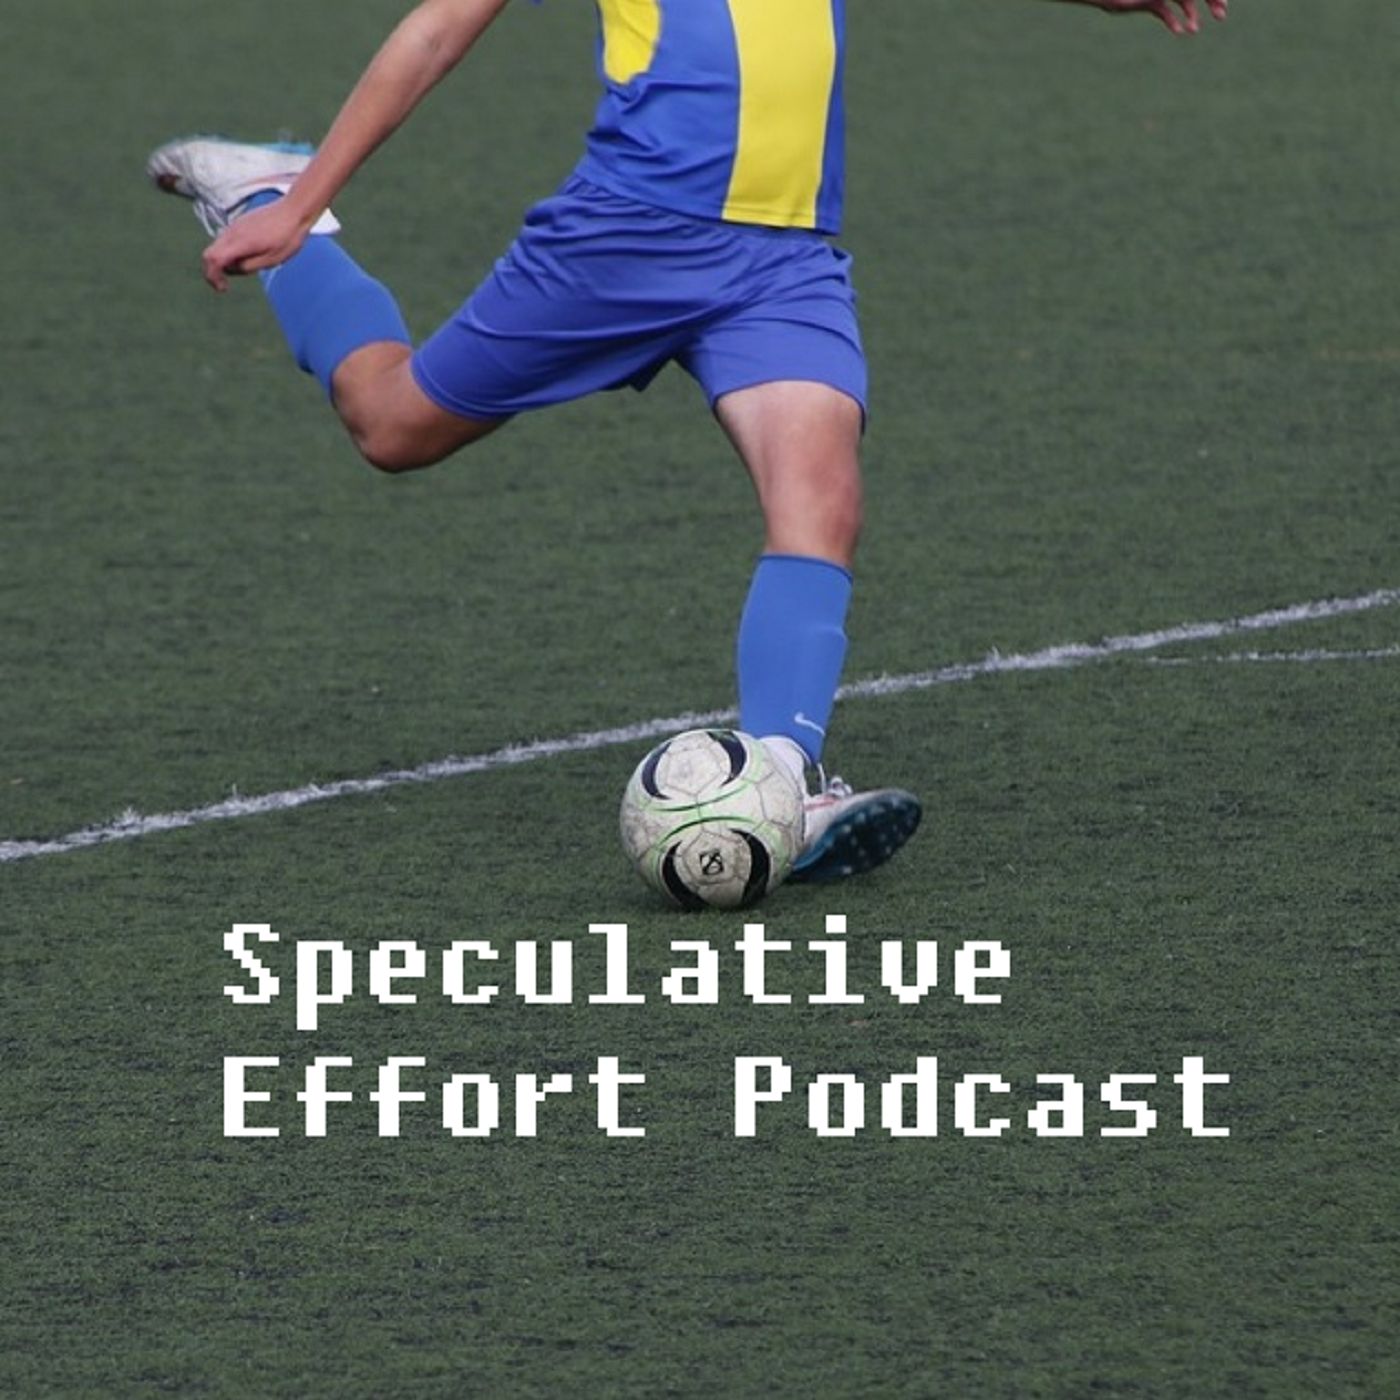 Speculative Effort Podcast